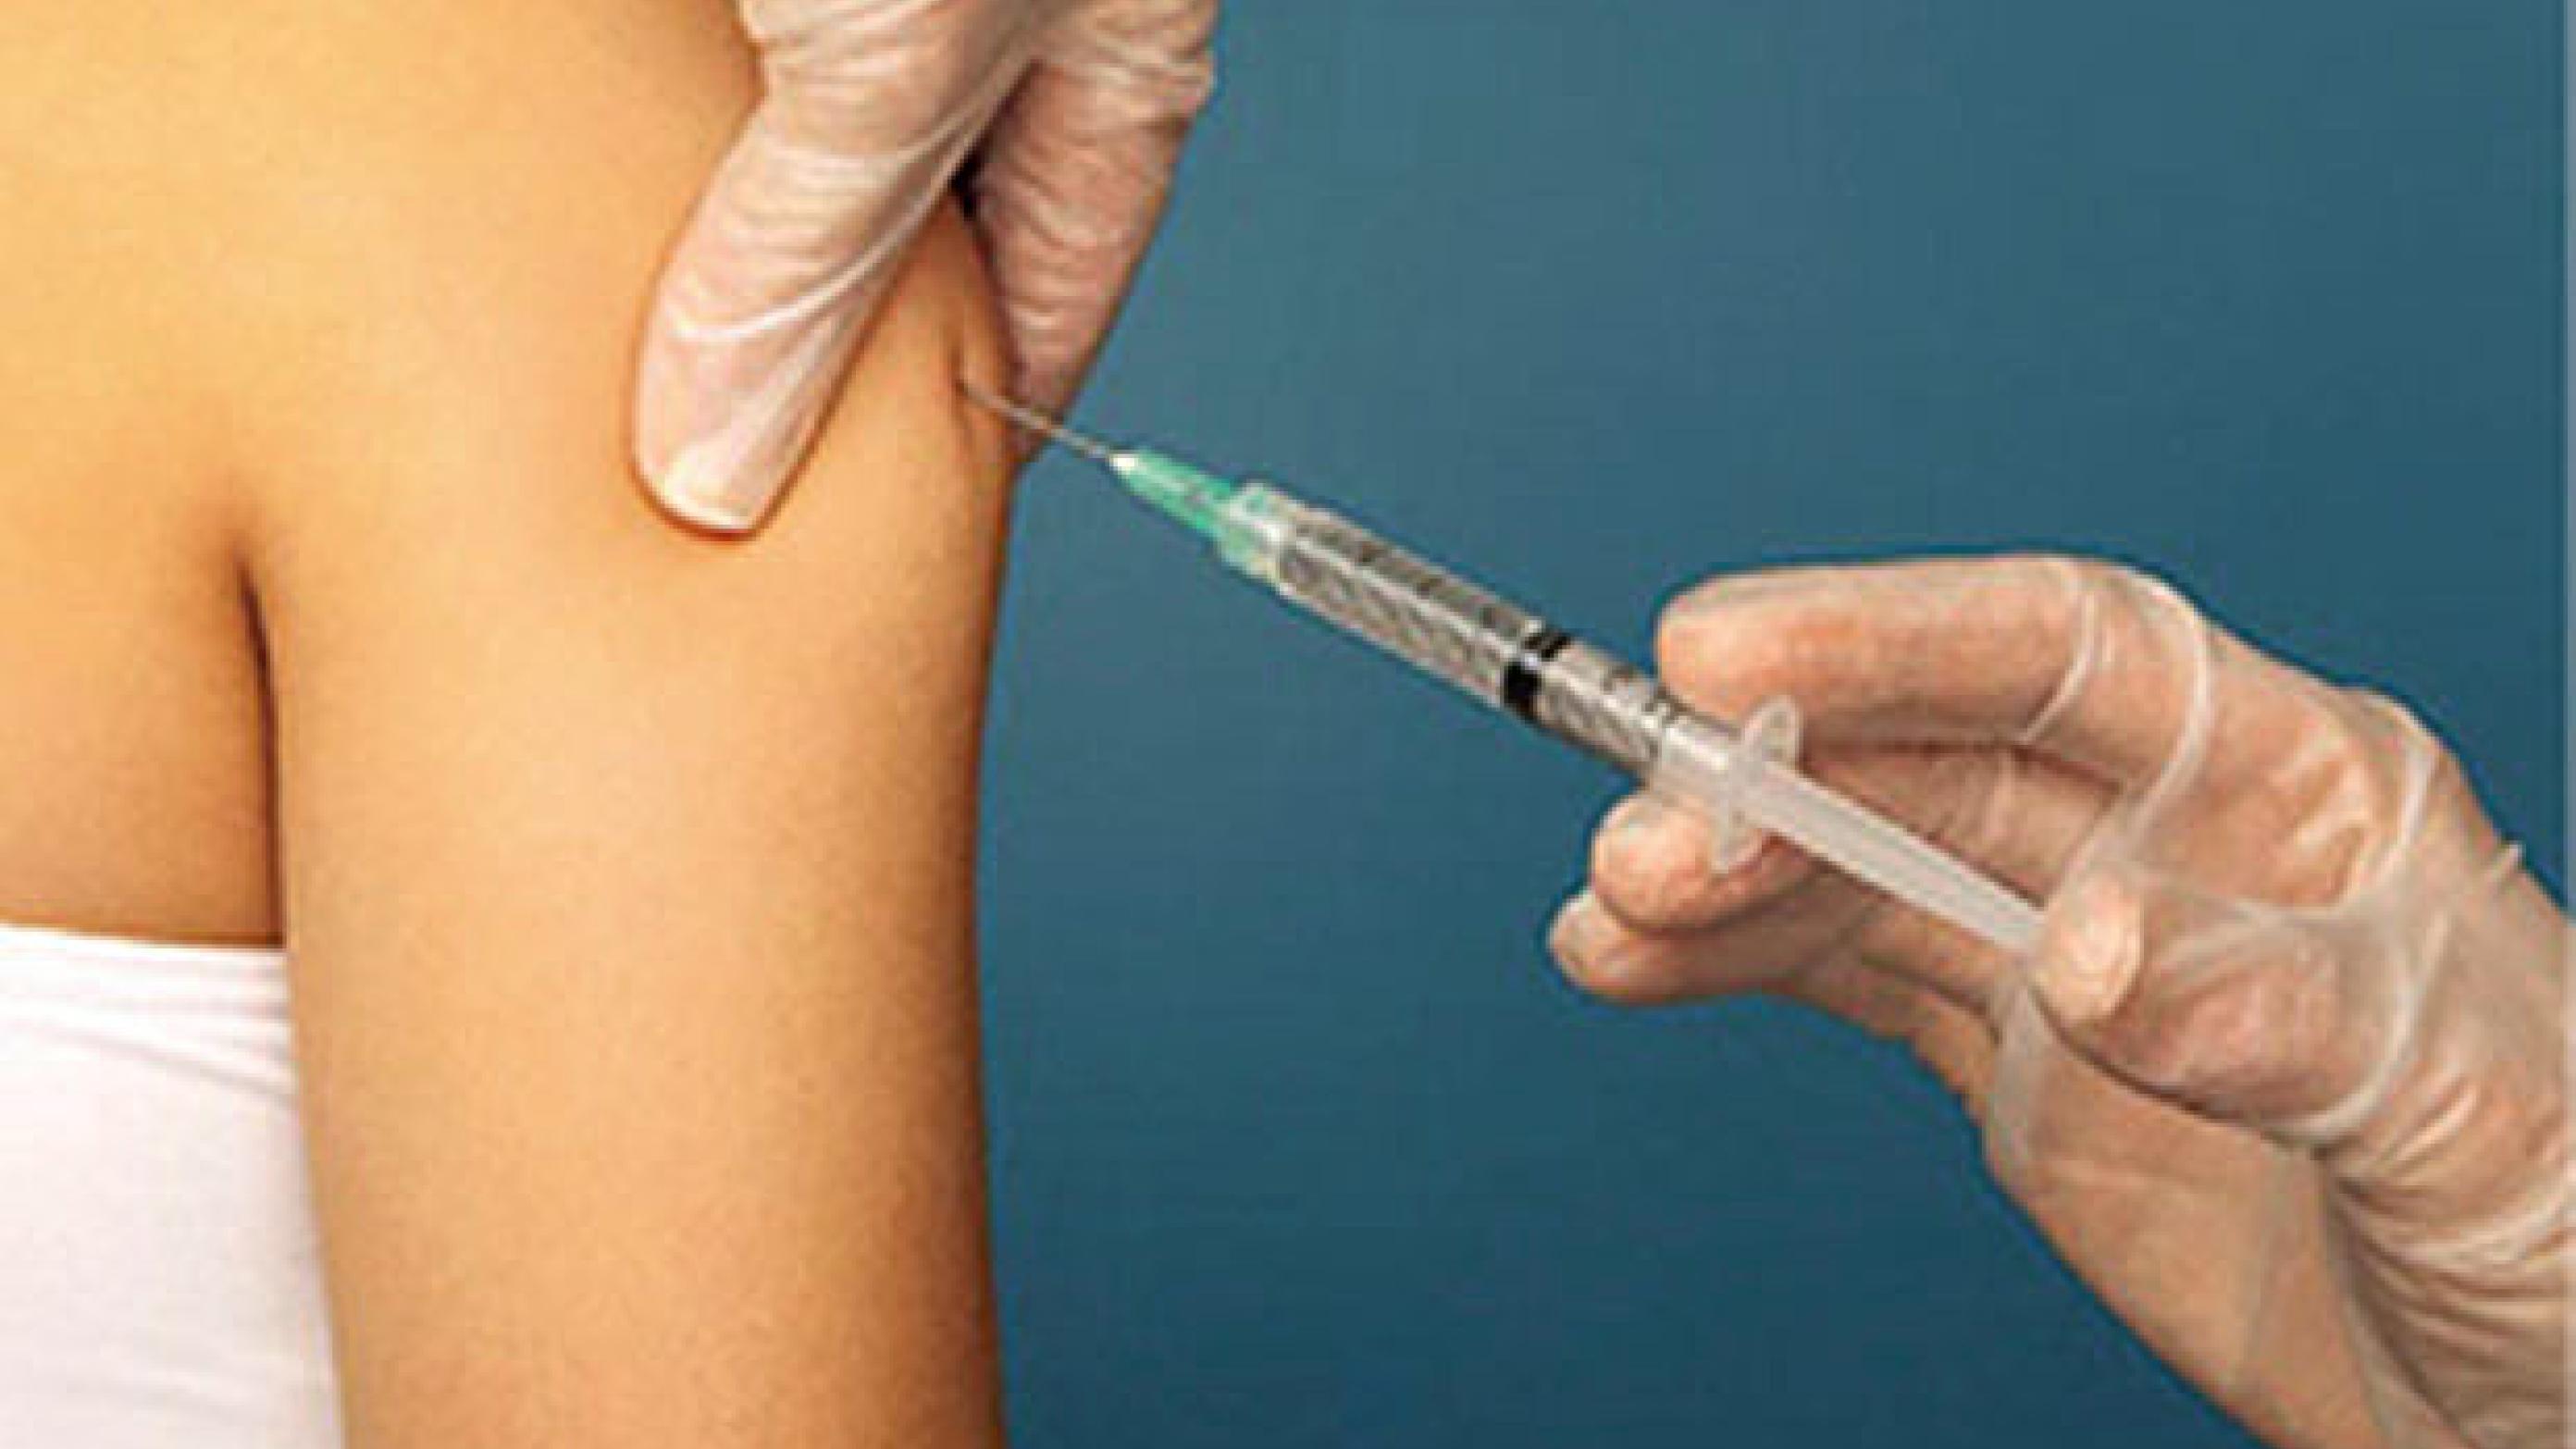 Vaccination mod humant papillom­virus hos en 12- årig pige.